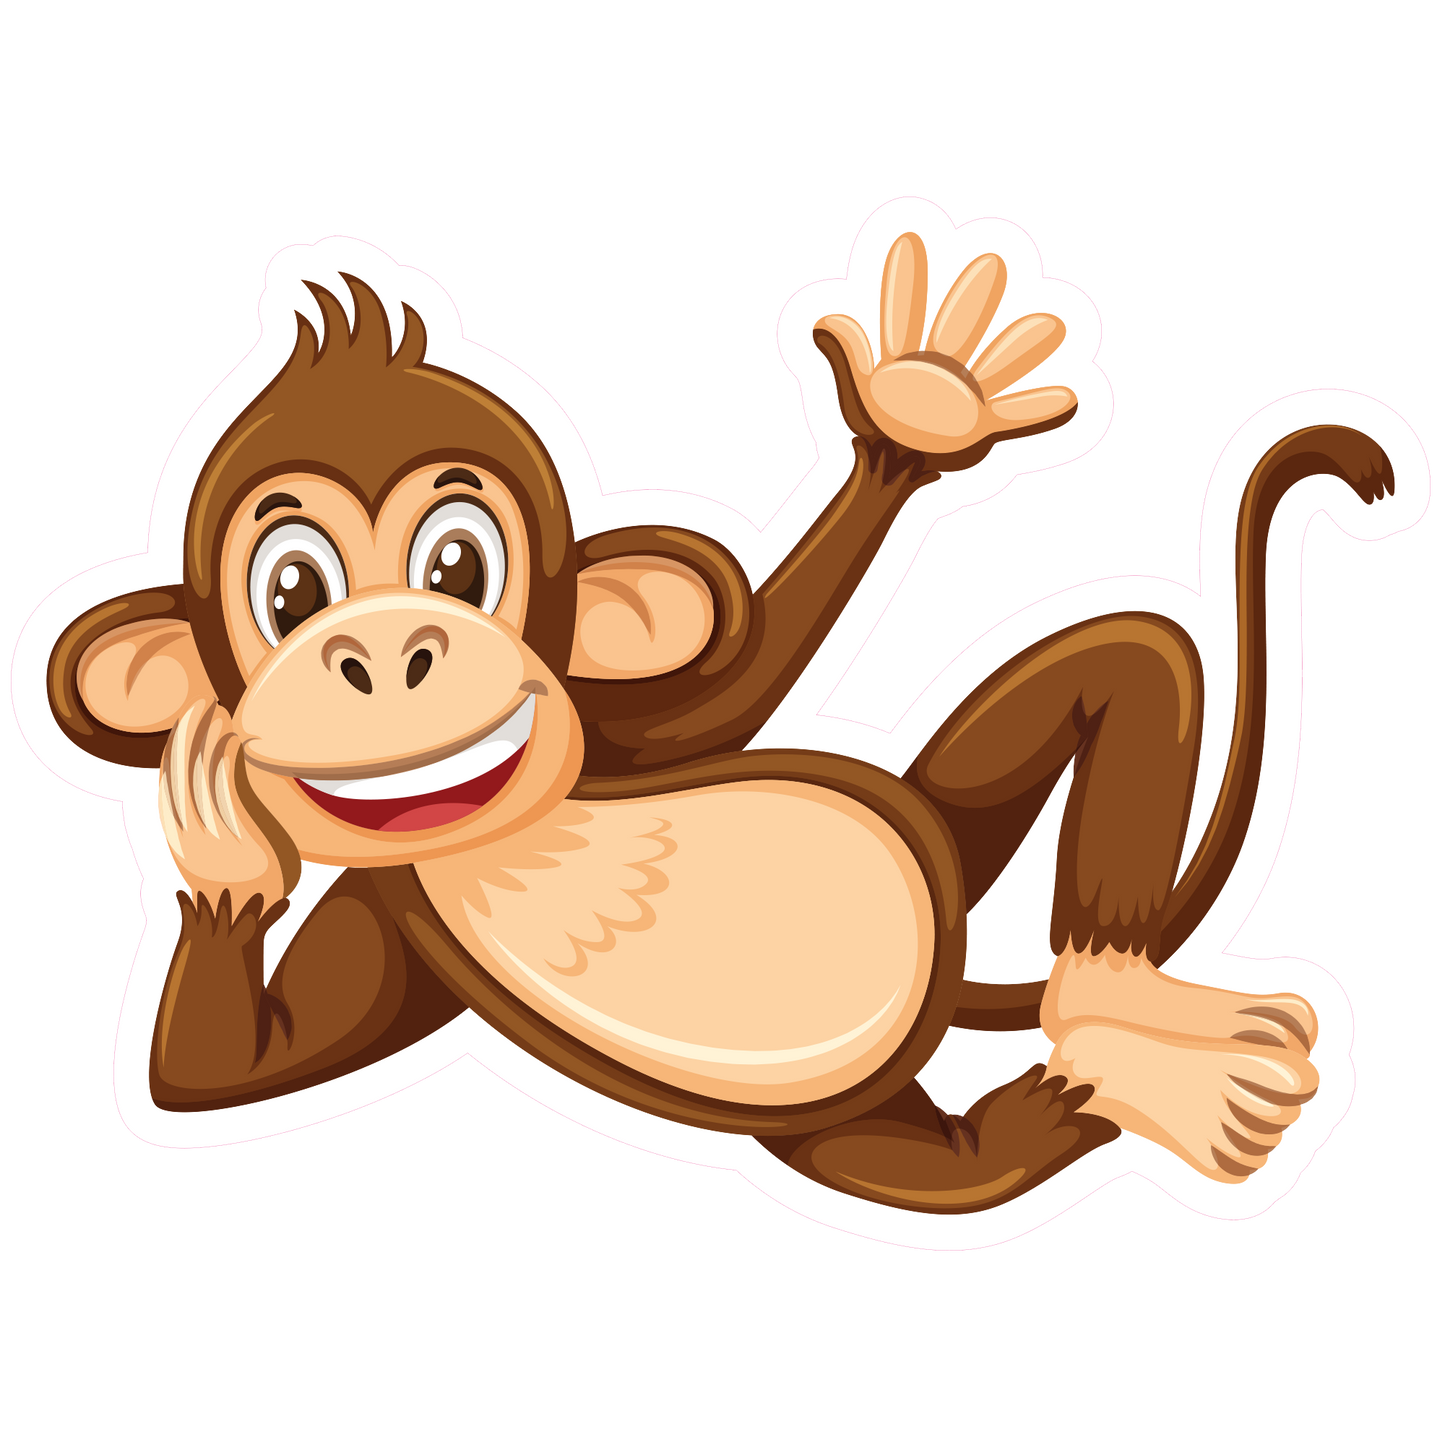 Cute Monkey Relaxing Sticker - Animal Decal